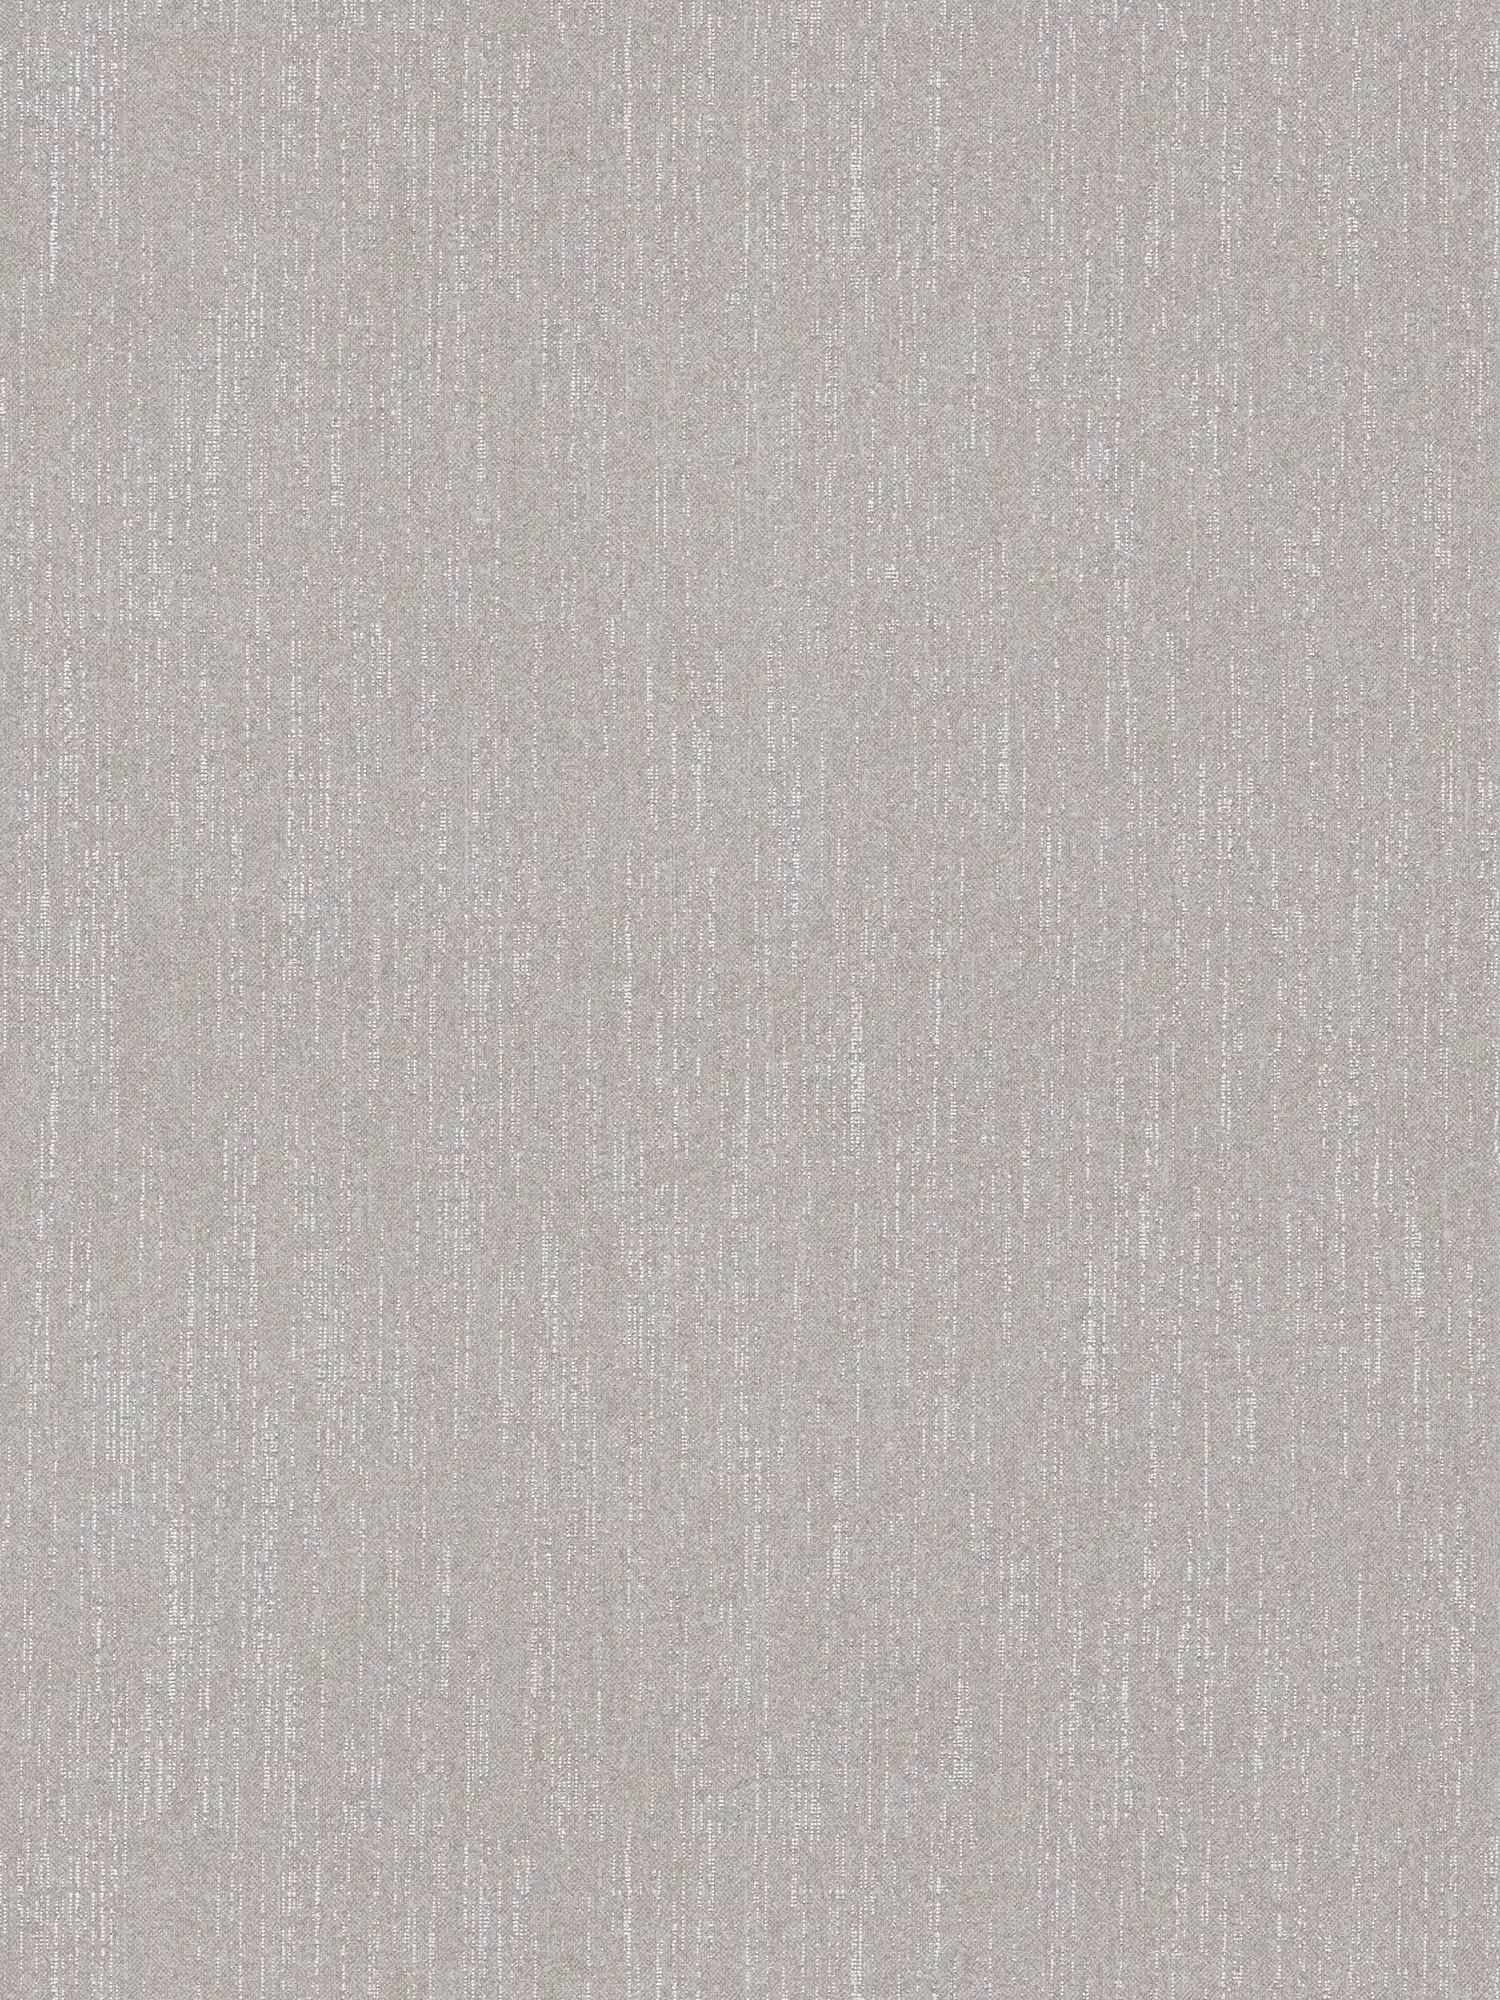 Plain wallpaper silver grey with bouclé effect - grey
